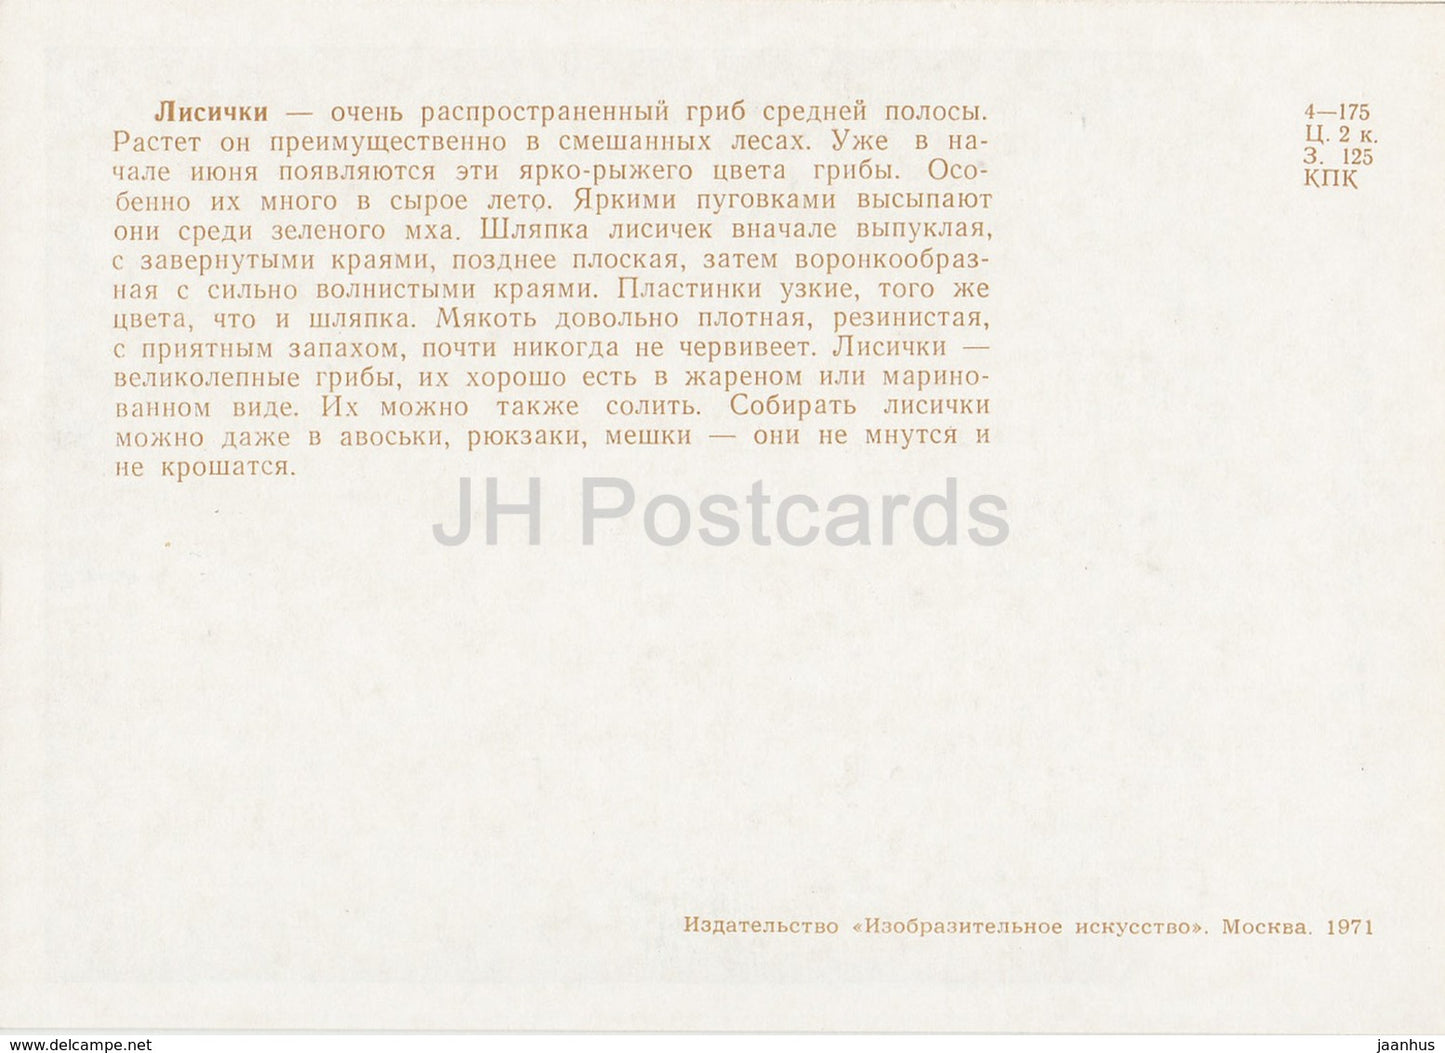 Pfifferling - Cantharellus cibarius - Pilze - Illustration - 1971 - Russland UdSSR - unbenutzt